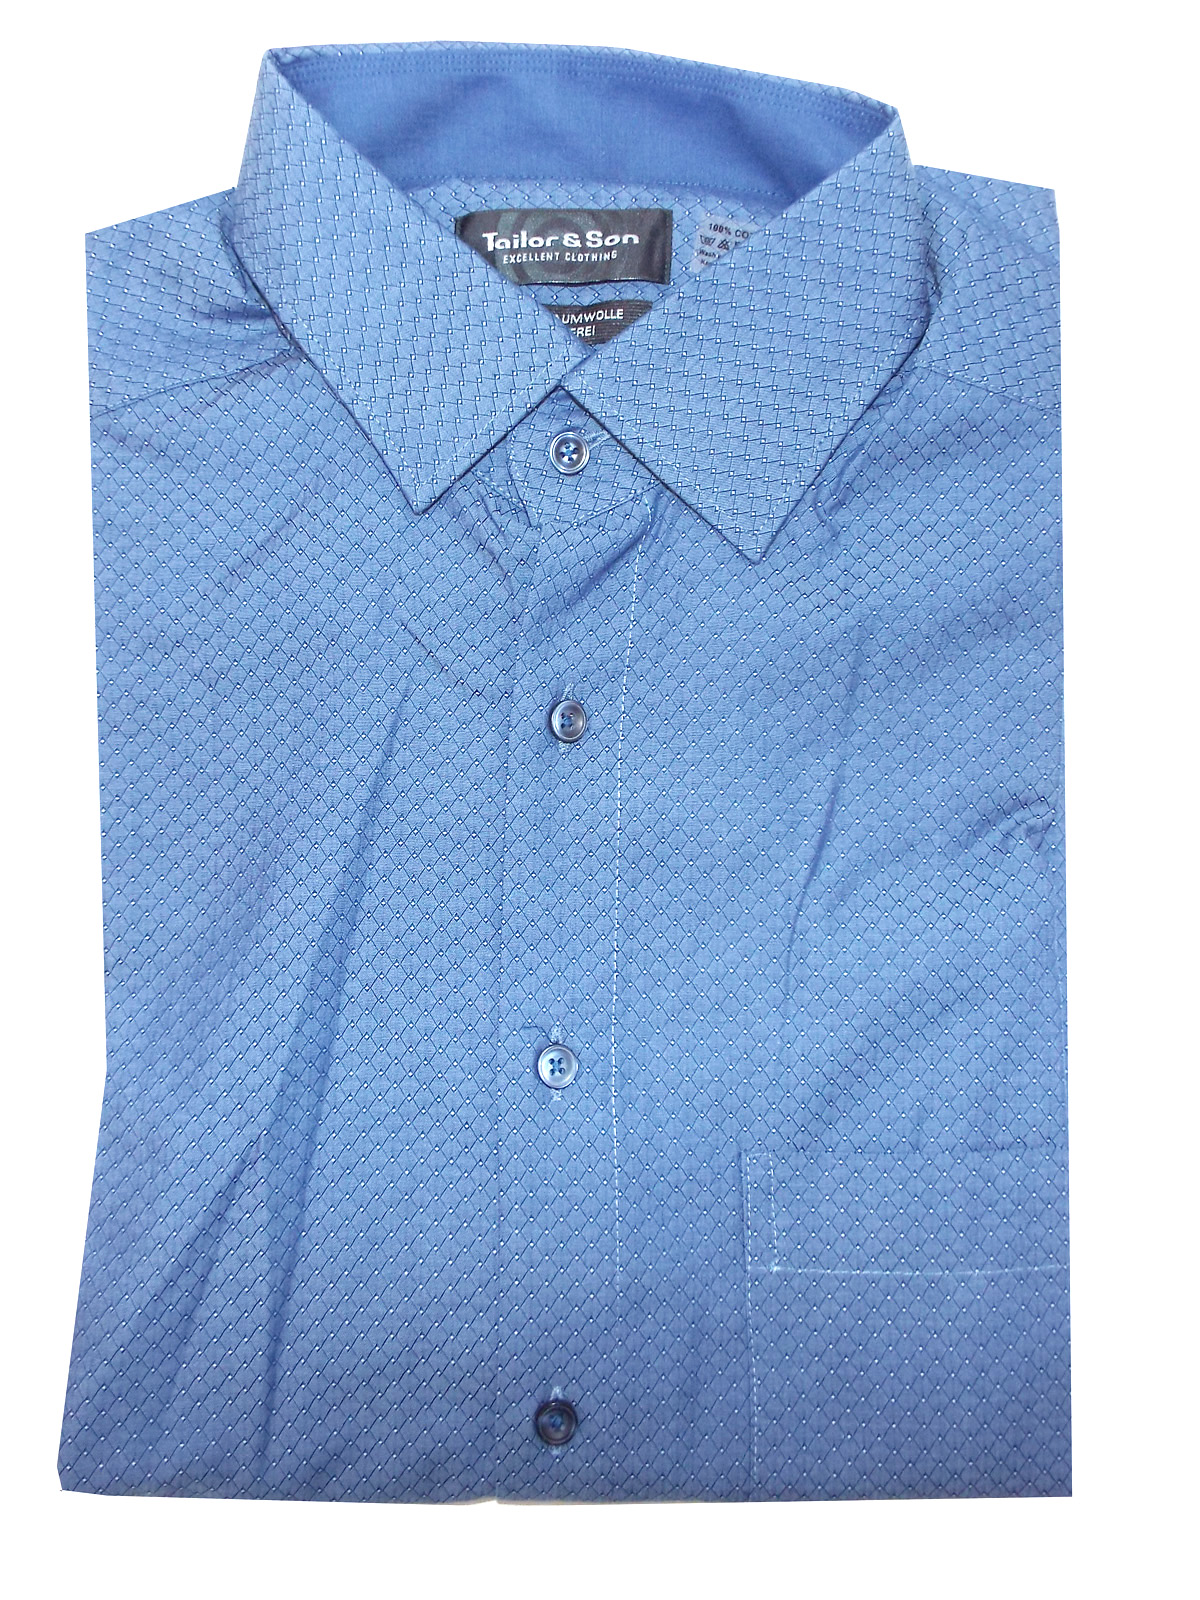 ASSORTED Mens Pure Cotton Long Sleeve Shirts - Size Medium to XXLarge